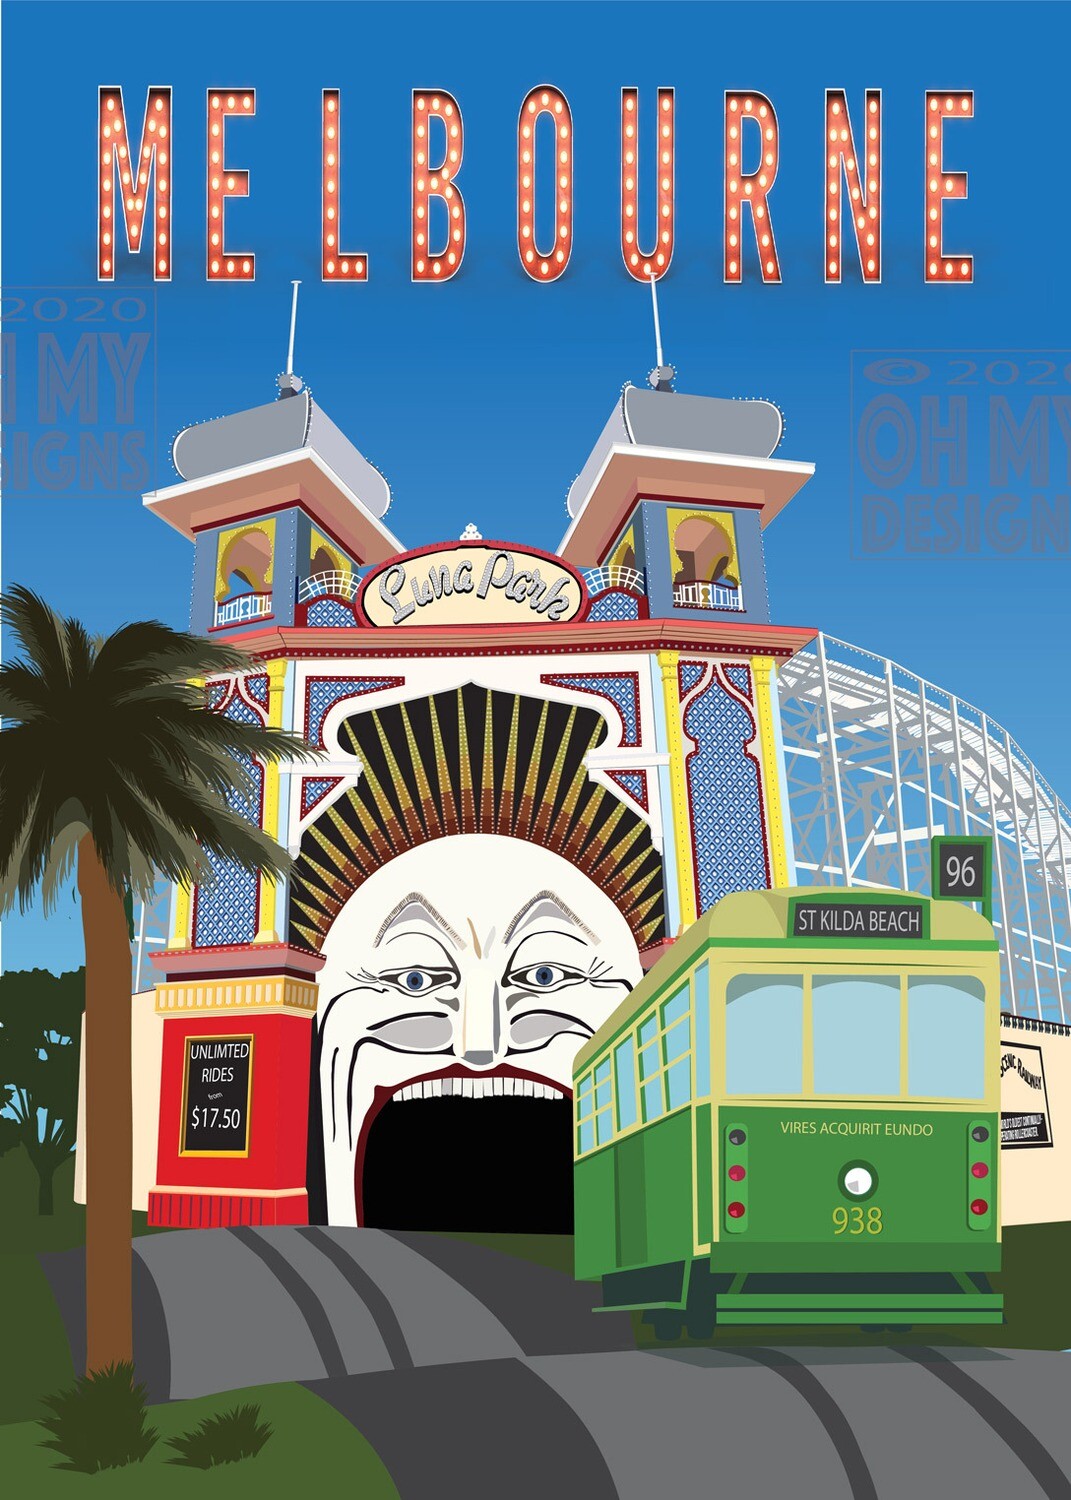 Melbourne - St Kilda, Luna Park and Tram